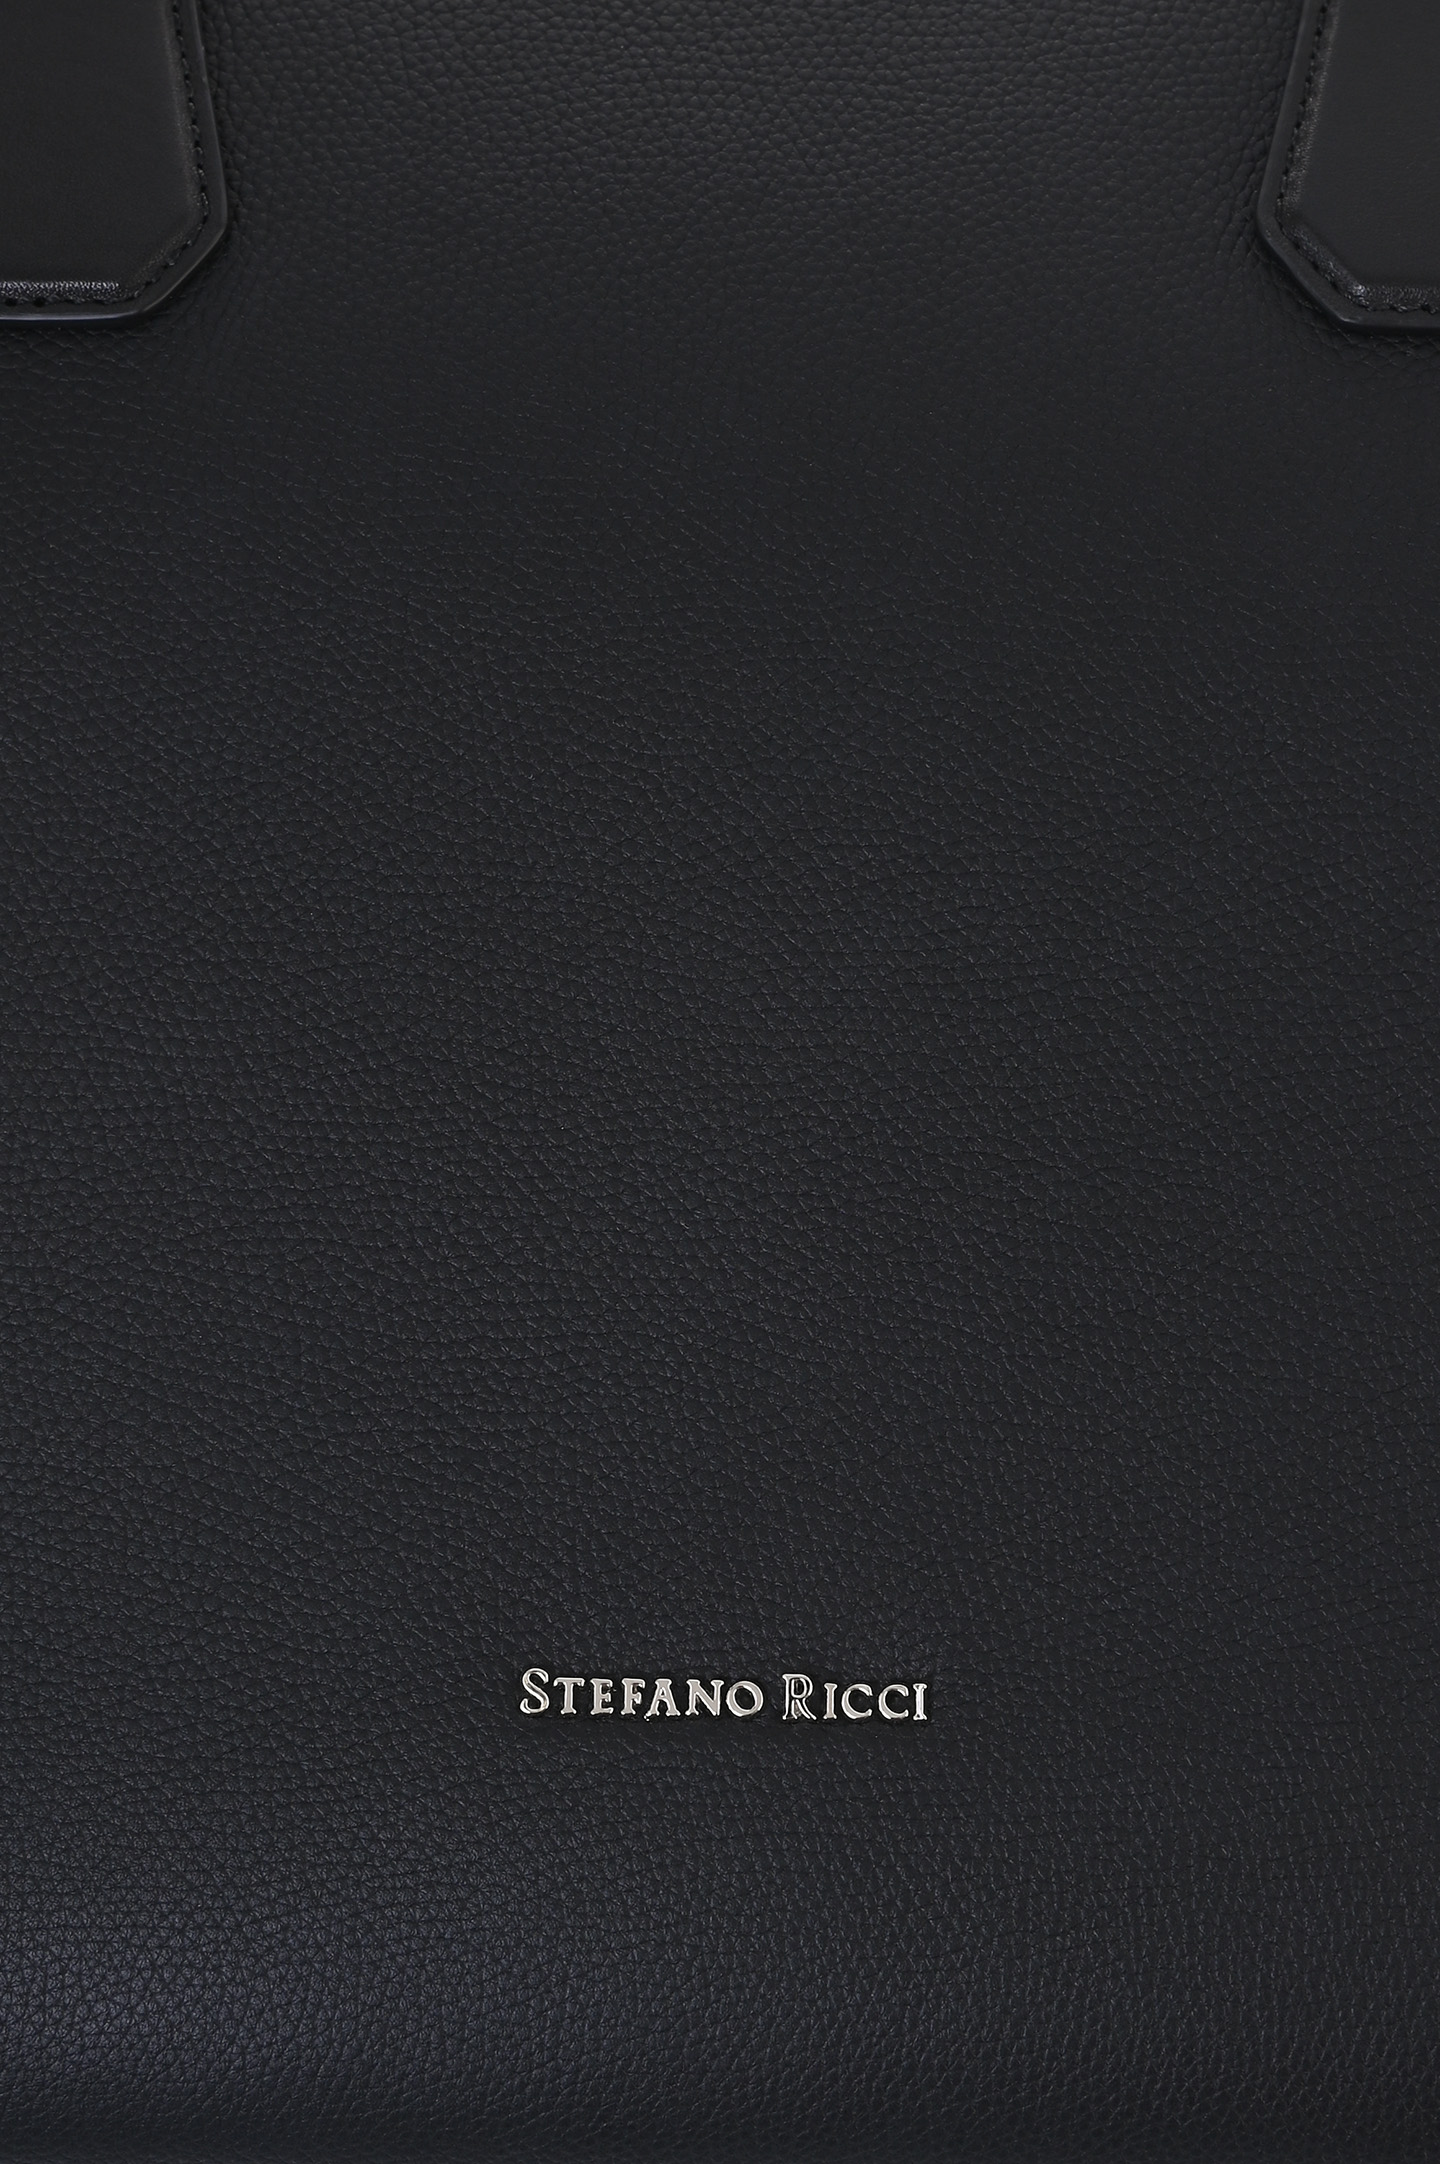 Сумка STEFANO RICCI ND222G9P MRVH, цвет: Черный, Мужской